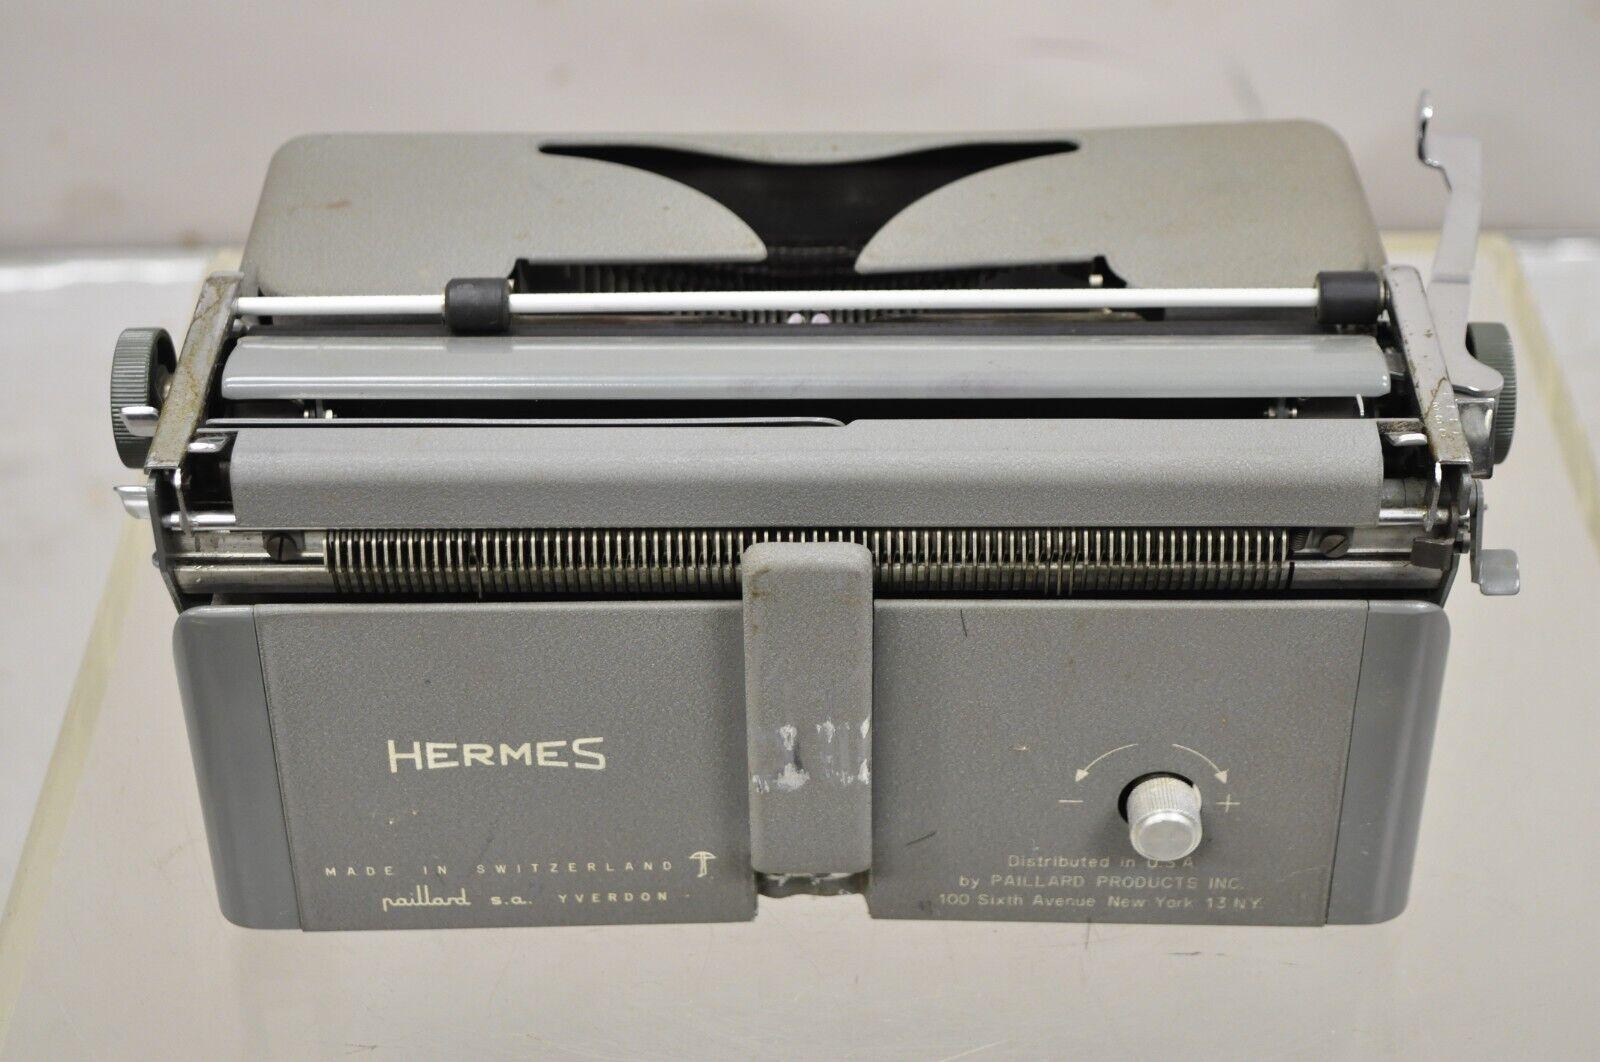 Vintage Hermes 2000 by Paillard Manual Typewriter with Green Carrying Case 3